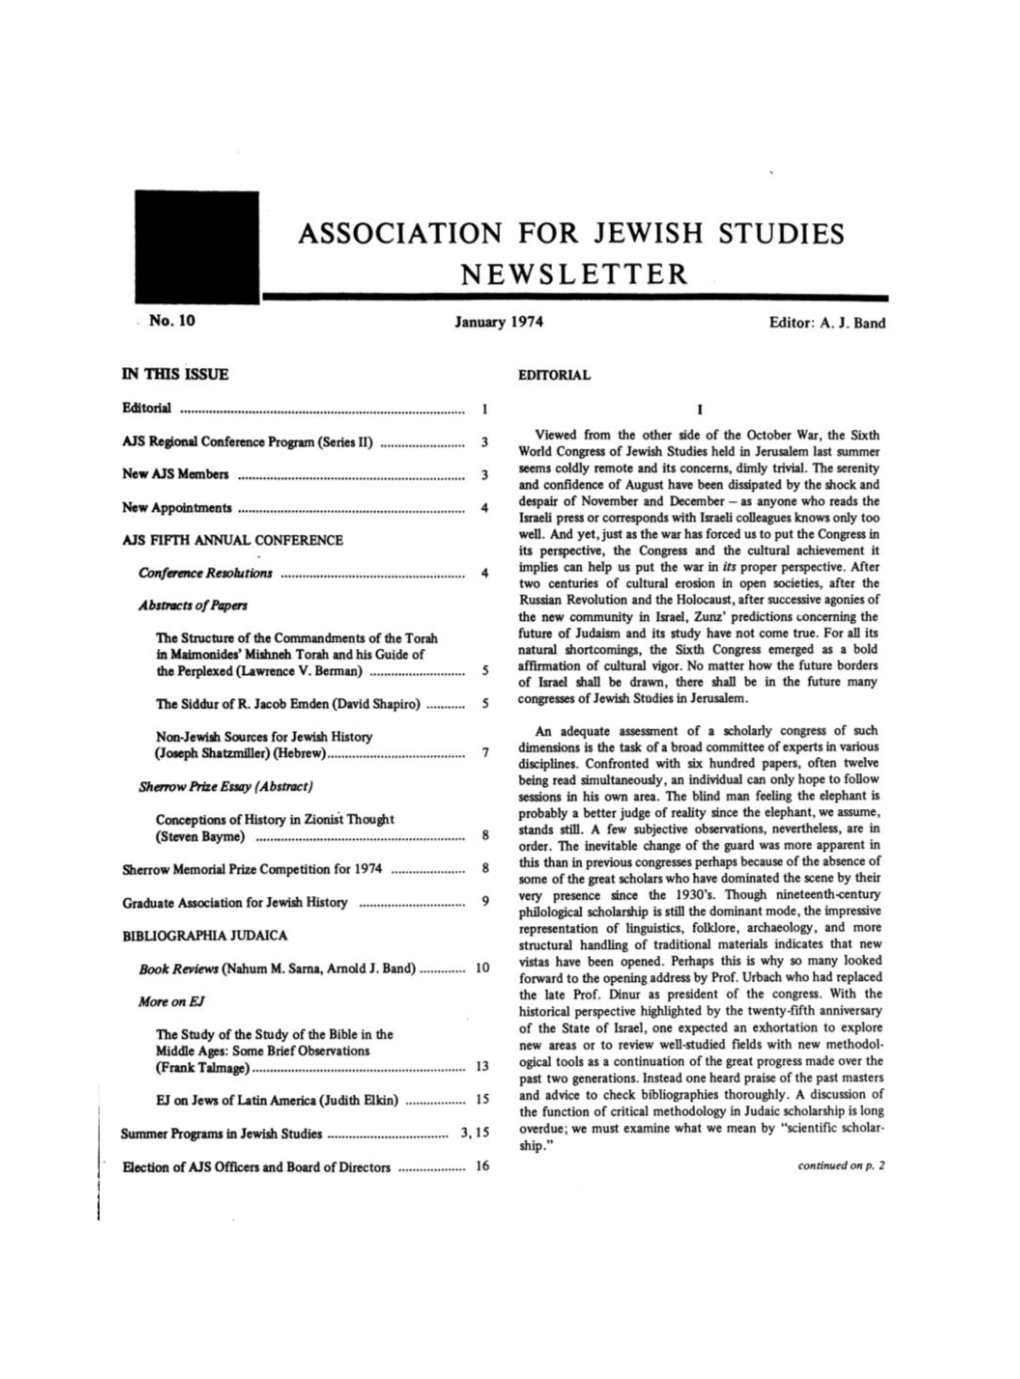 ASSOCIATION for JEWISH STUDIES NEWSLETTER No